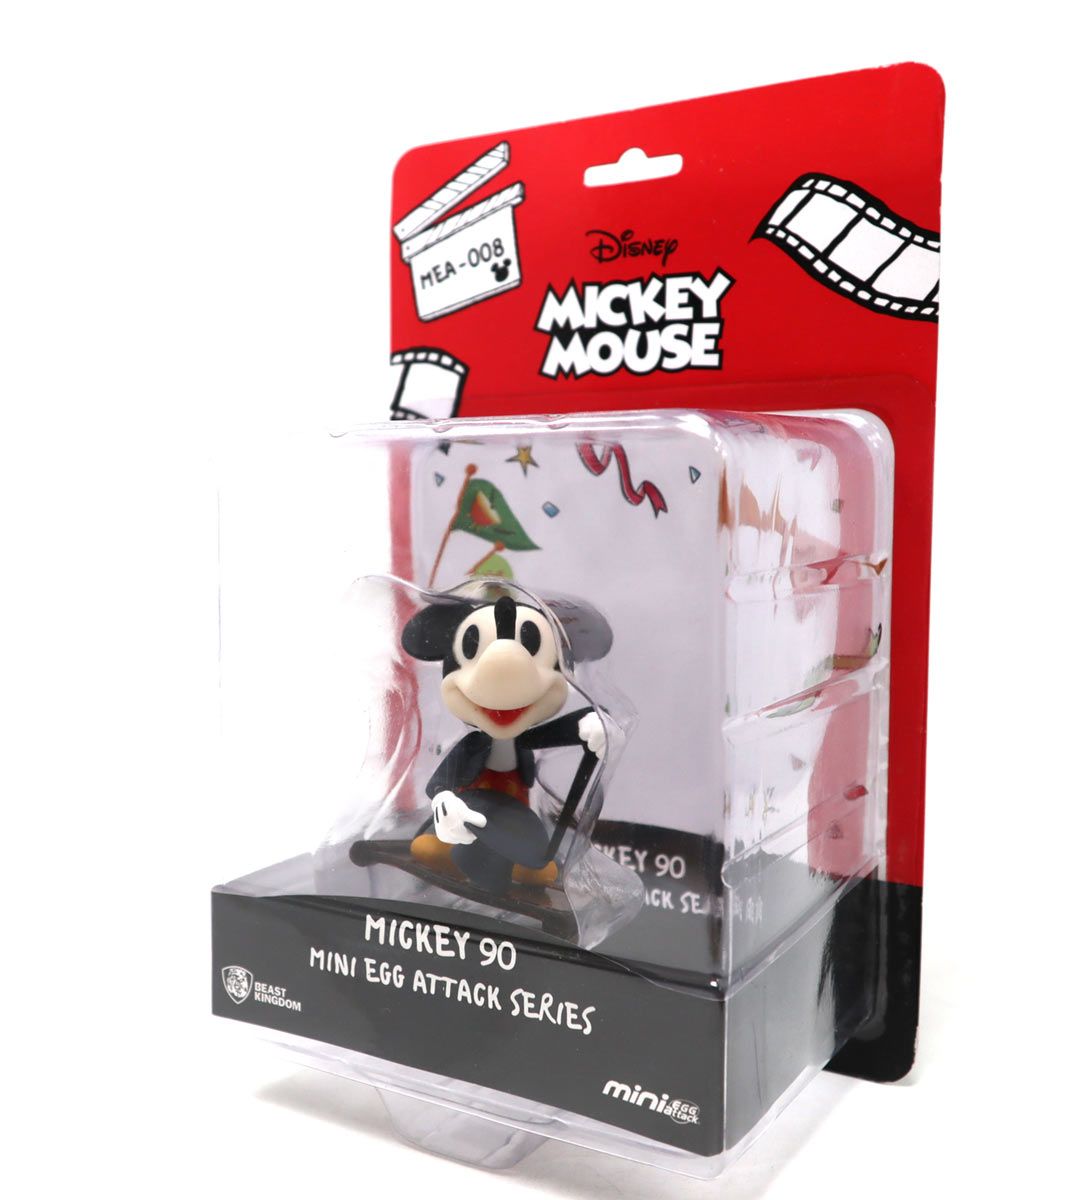 Mini Egg Attack Series - Magician Mickey 90 (Mickey Mouse)